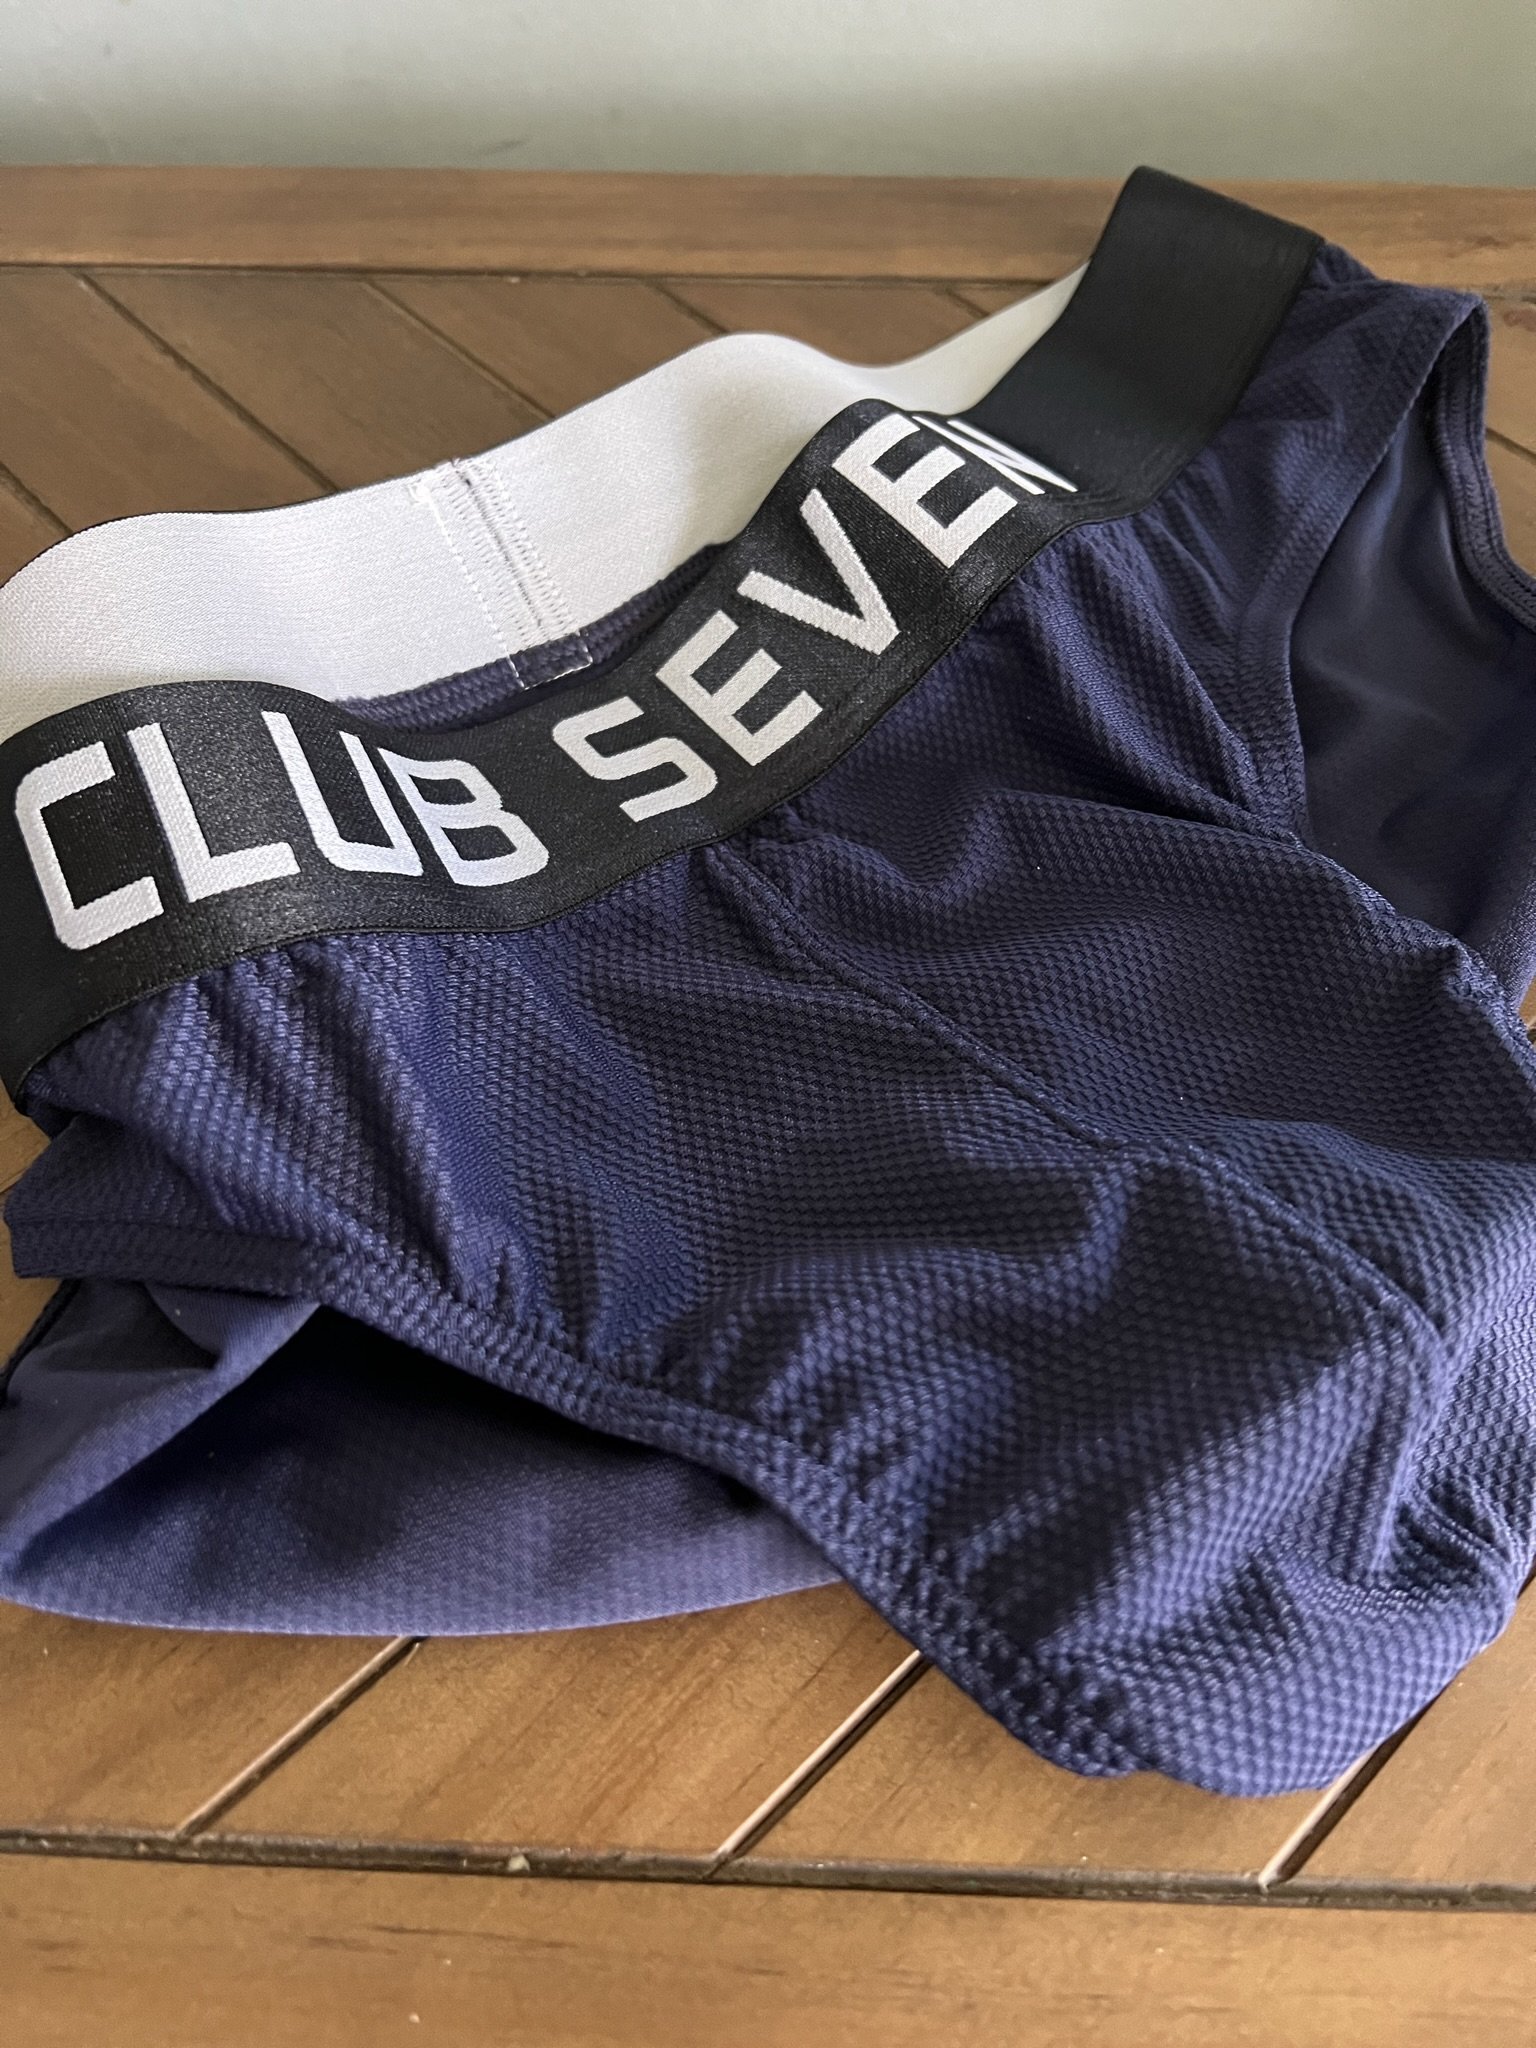 Club Seven Menswear Underwear Review. Should you buy them? — DAPPER &  GROOMED